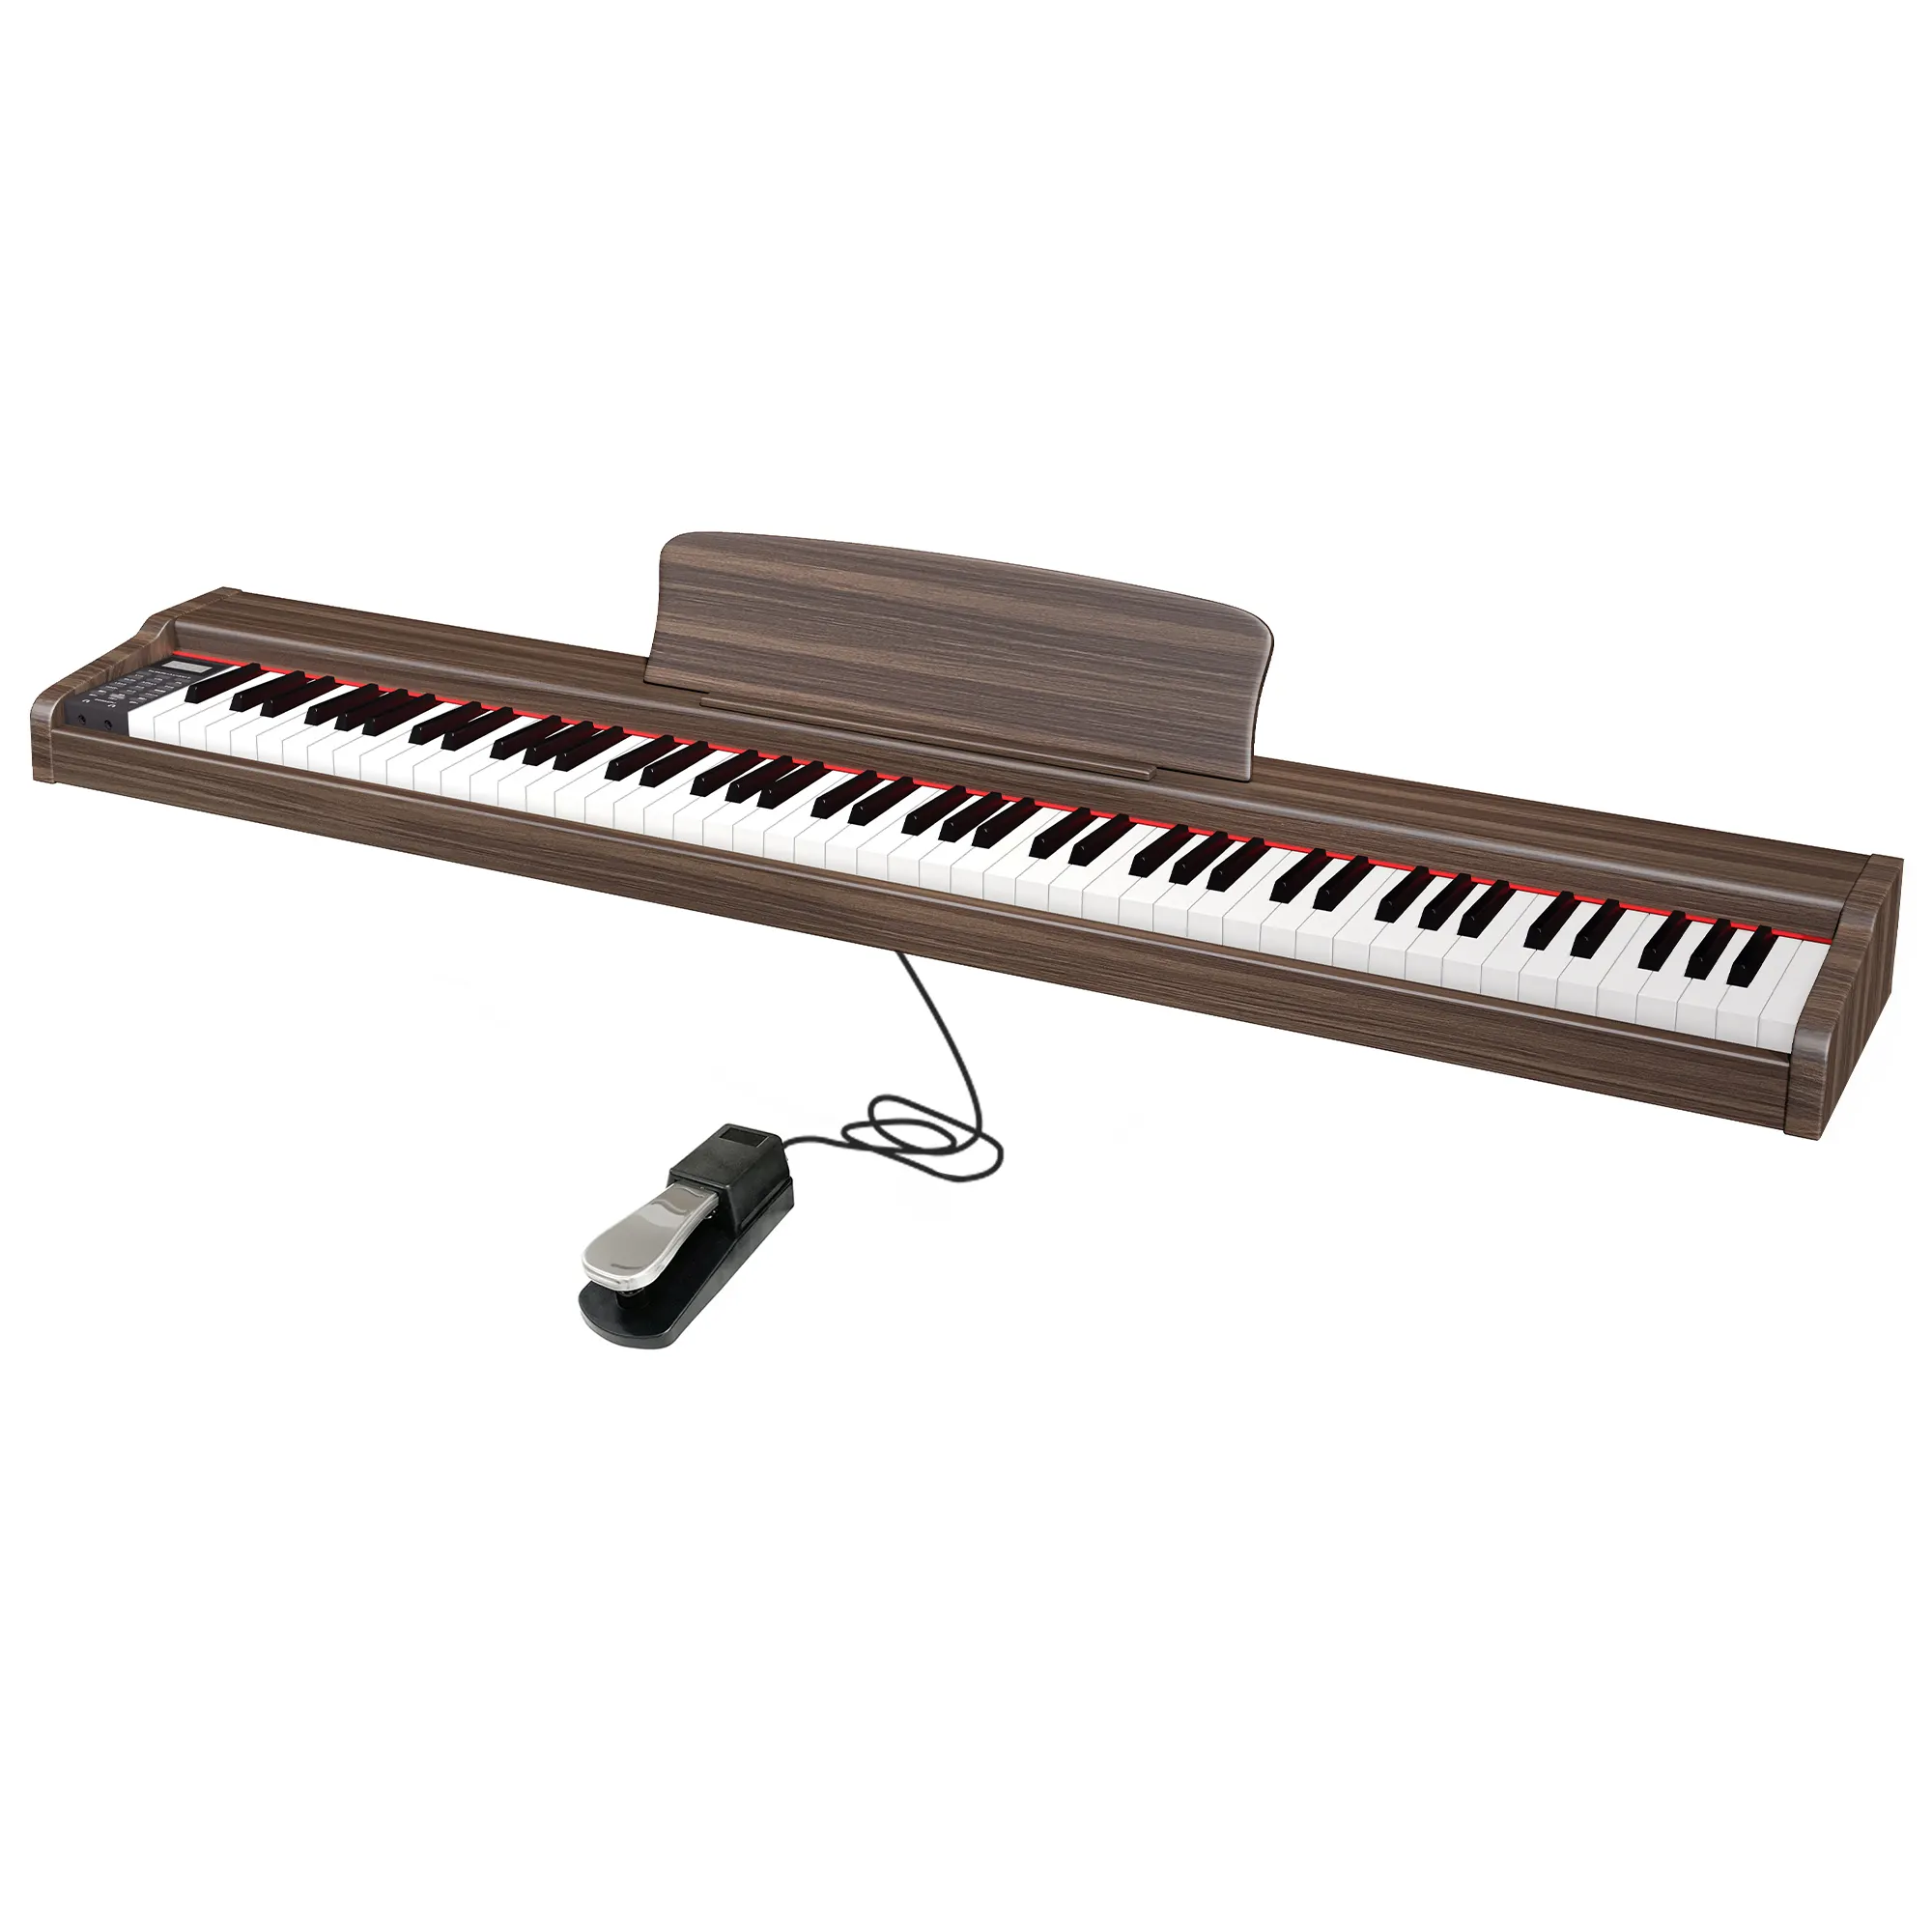 BLANTH Portable piano keyboard used pianos for sale midi keyboard piano 88 keys